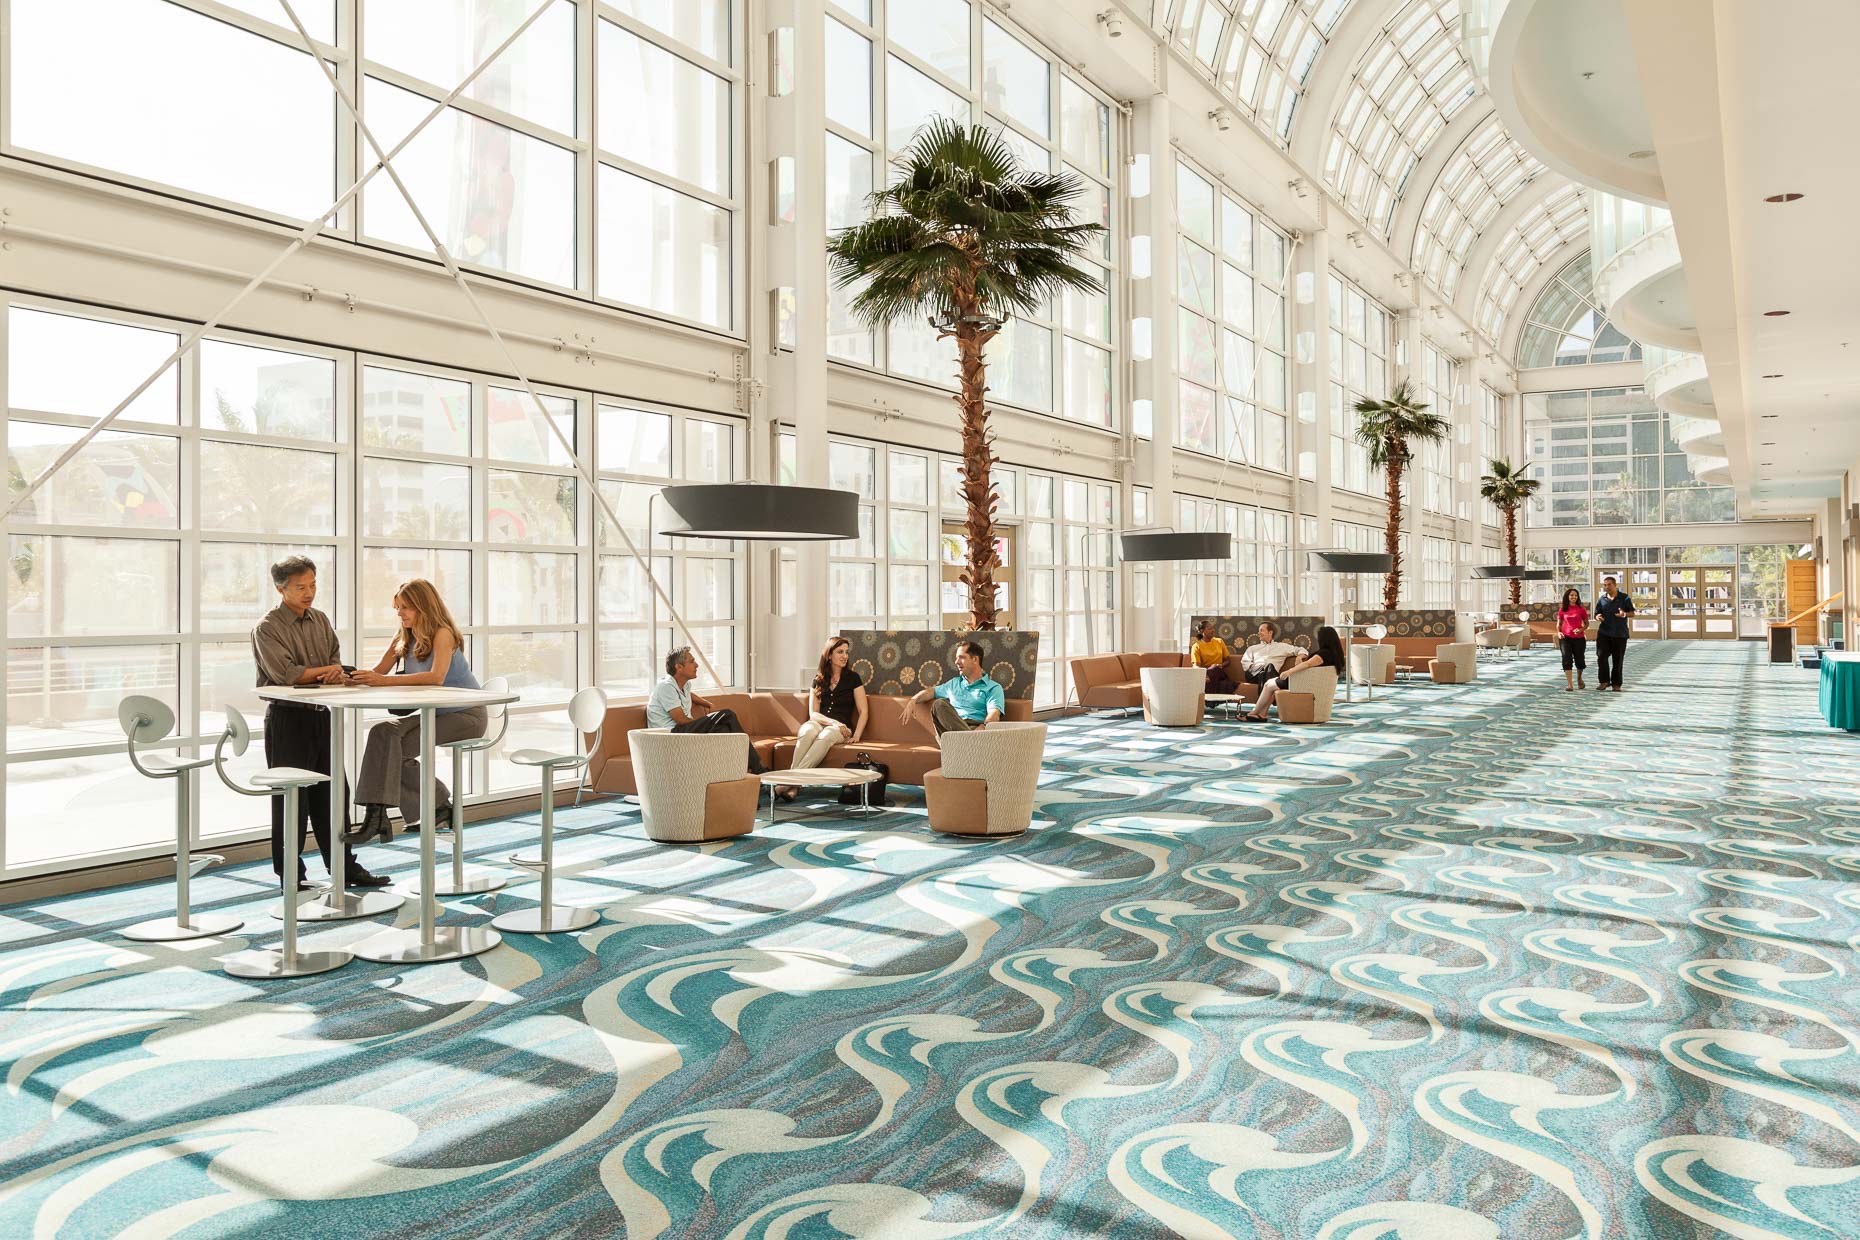 Atrium lobby of Long Beach Convention Center, Long Beach, California by David Zaitz